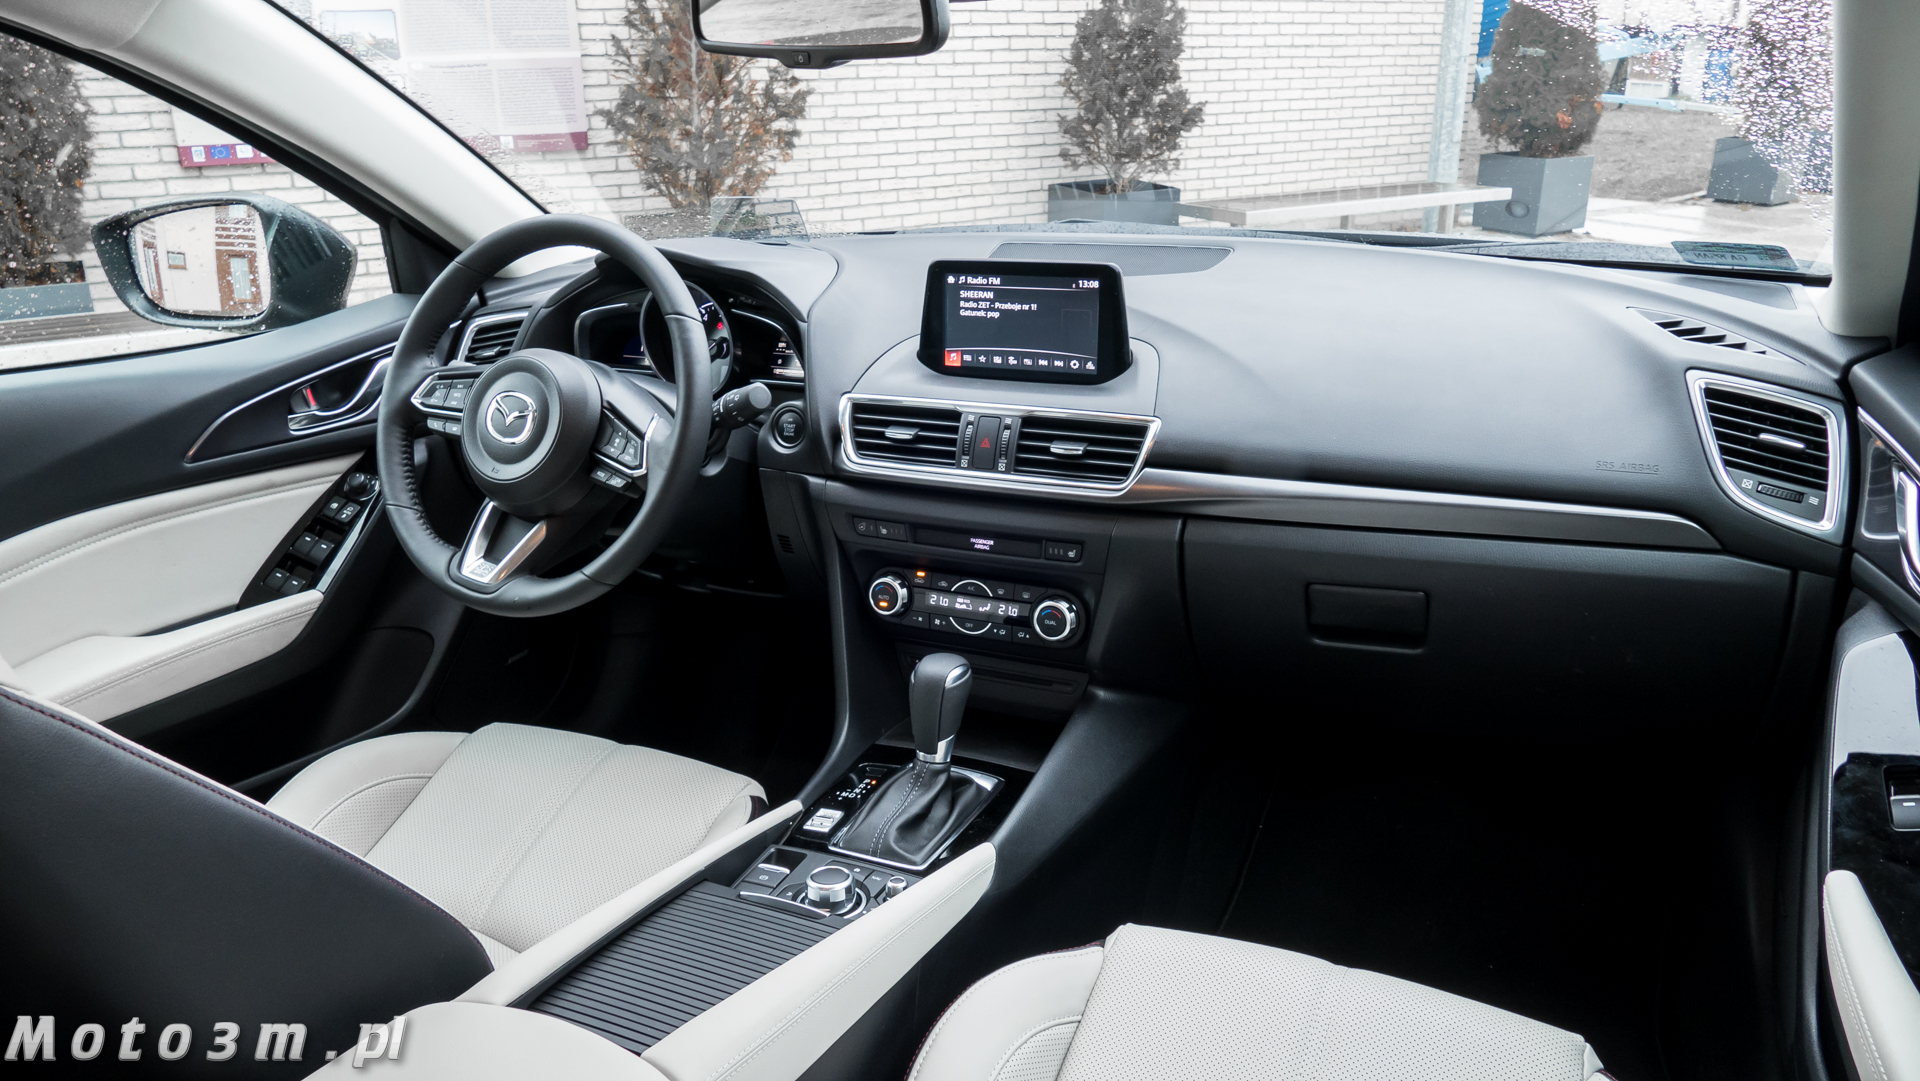 Mazda3 2017 hatchback SkyPassion 2.0 odświeżona